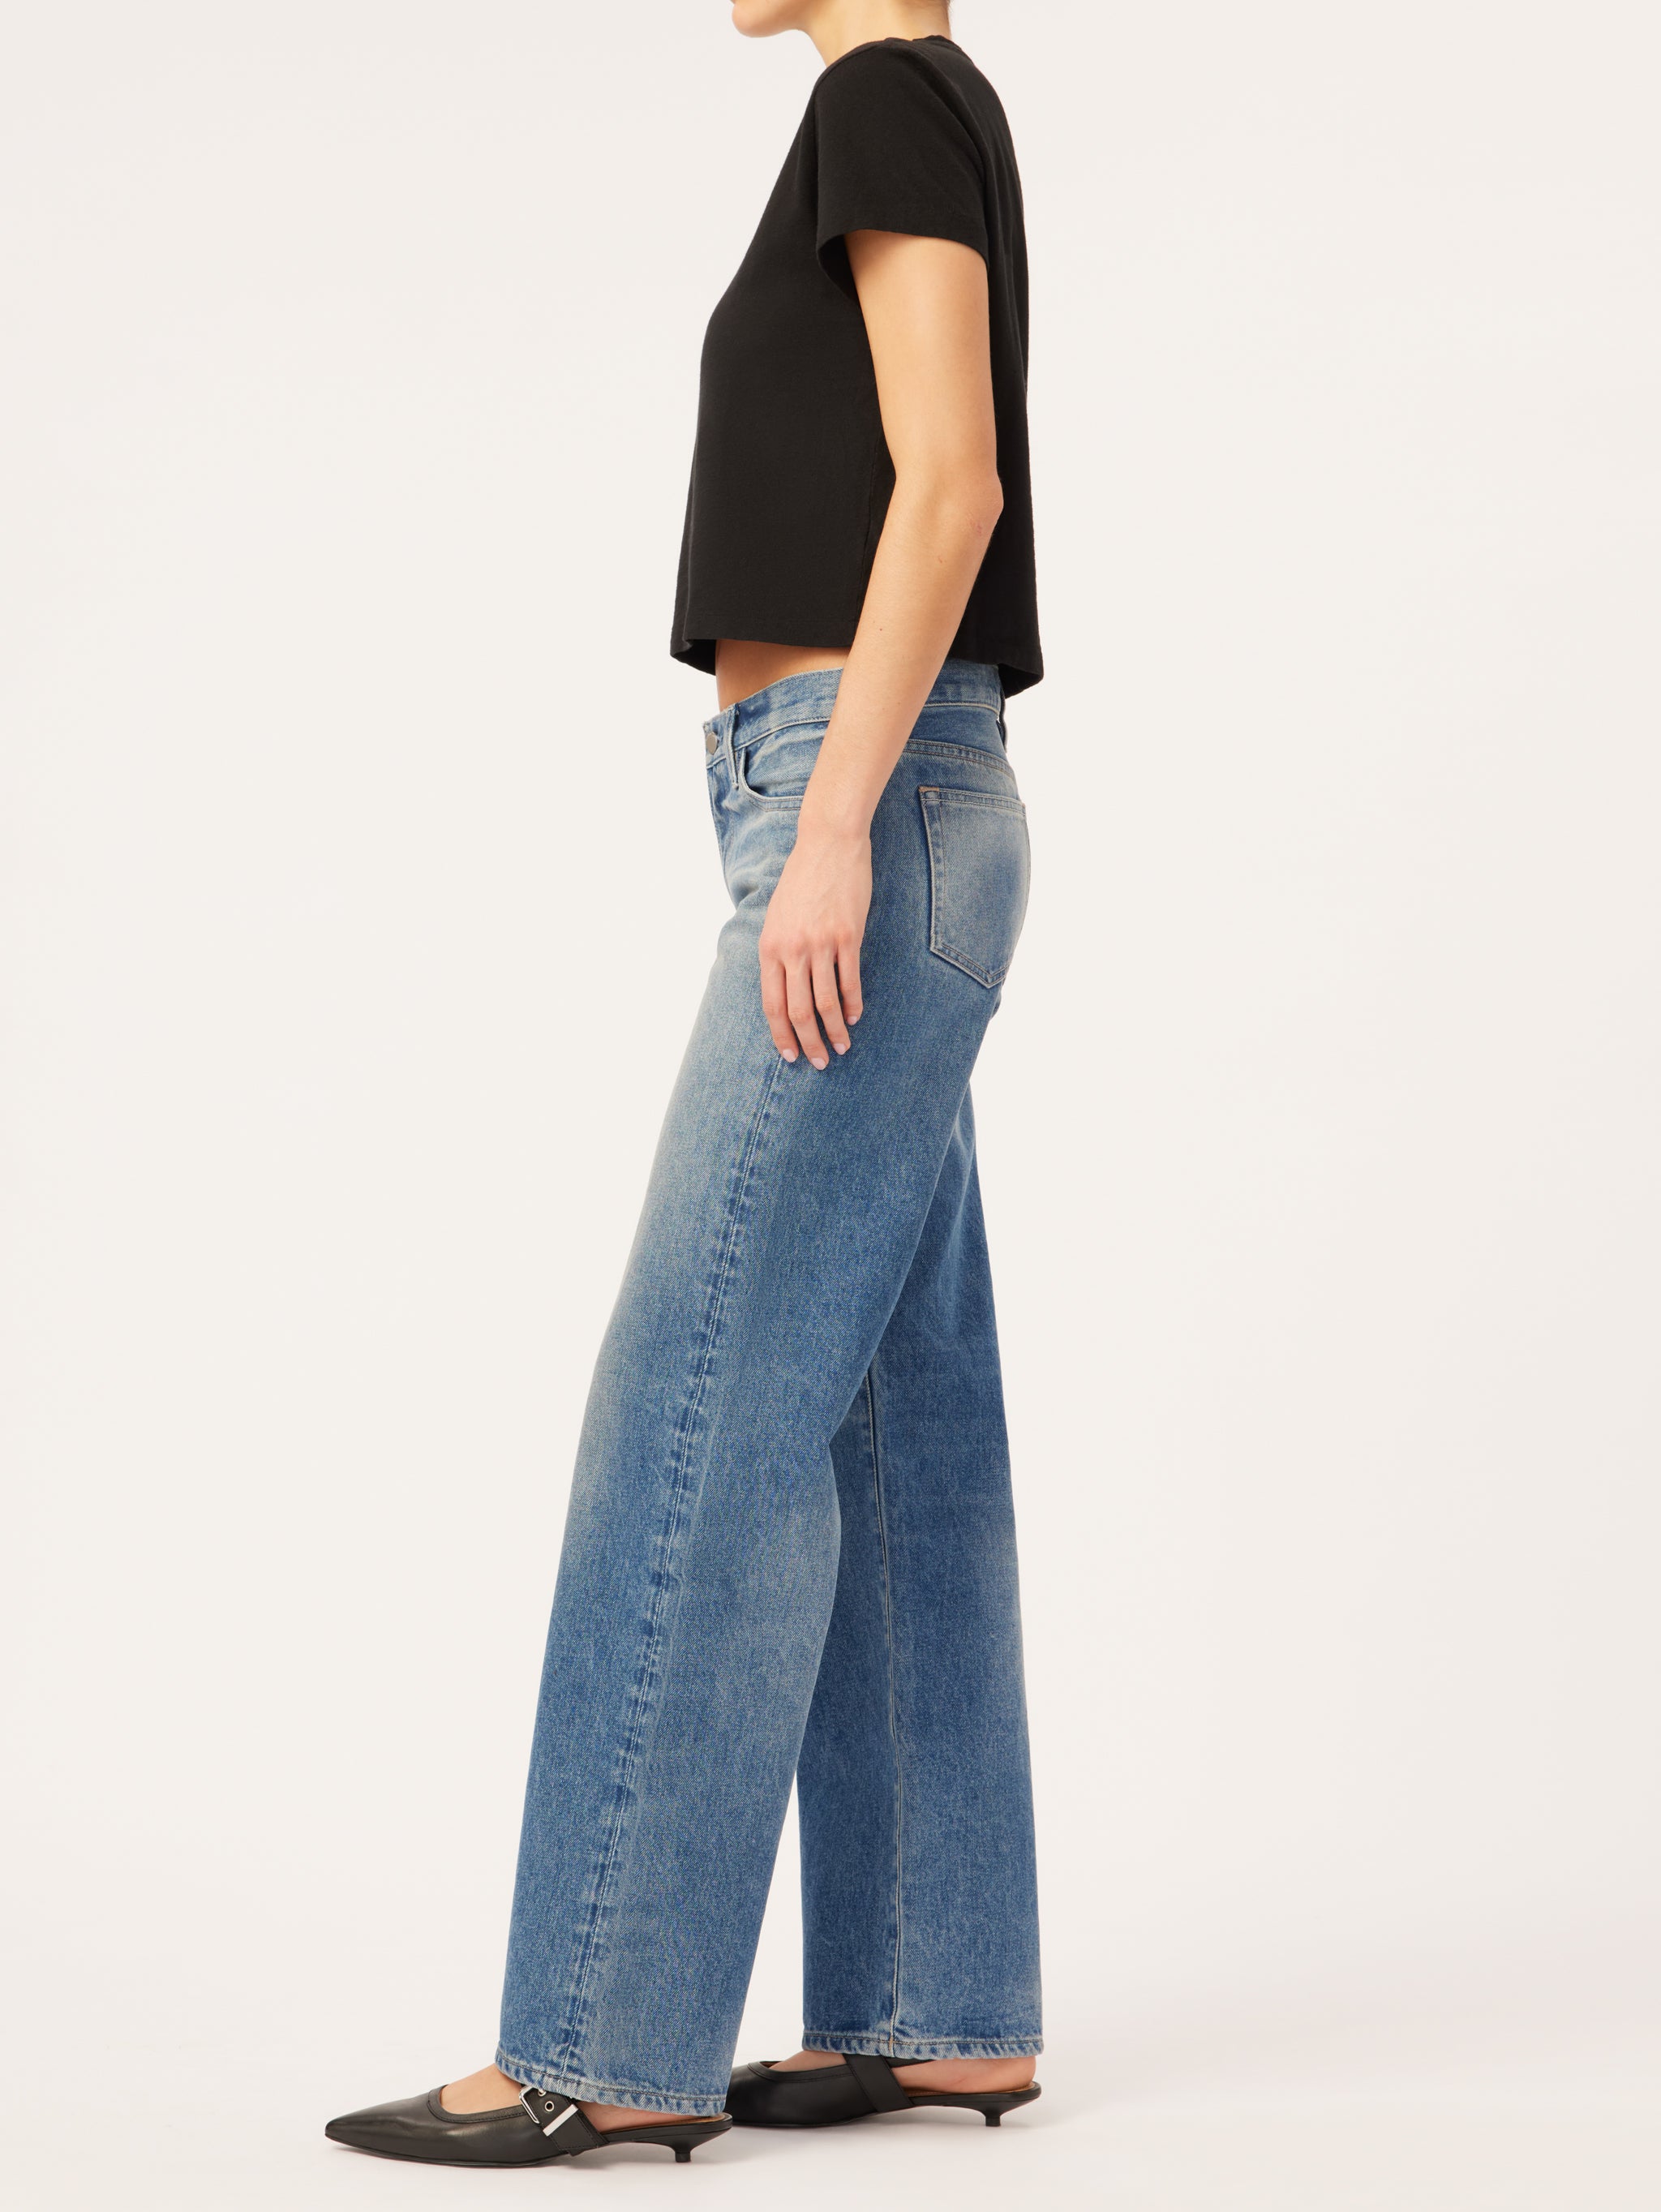 Buy China Wholesale Ladies Straight Leg Pants Women's Jeans Light